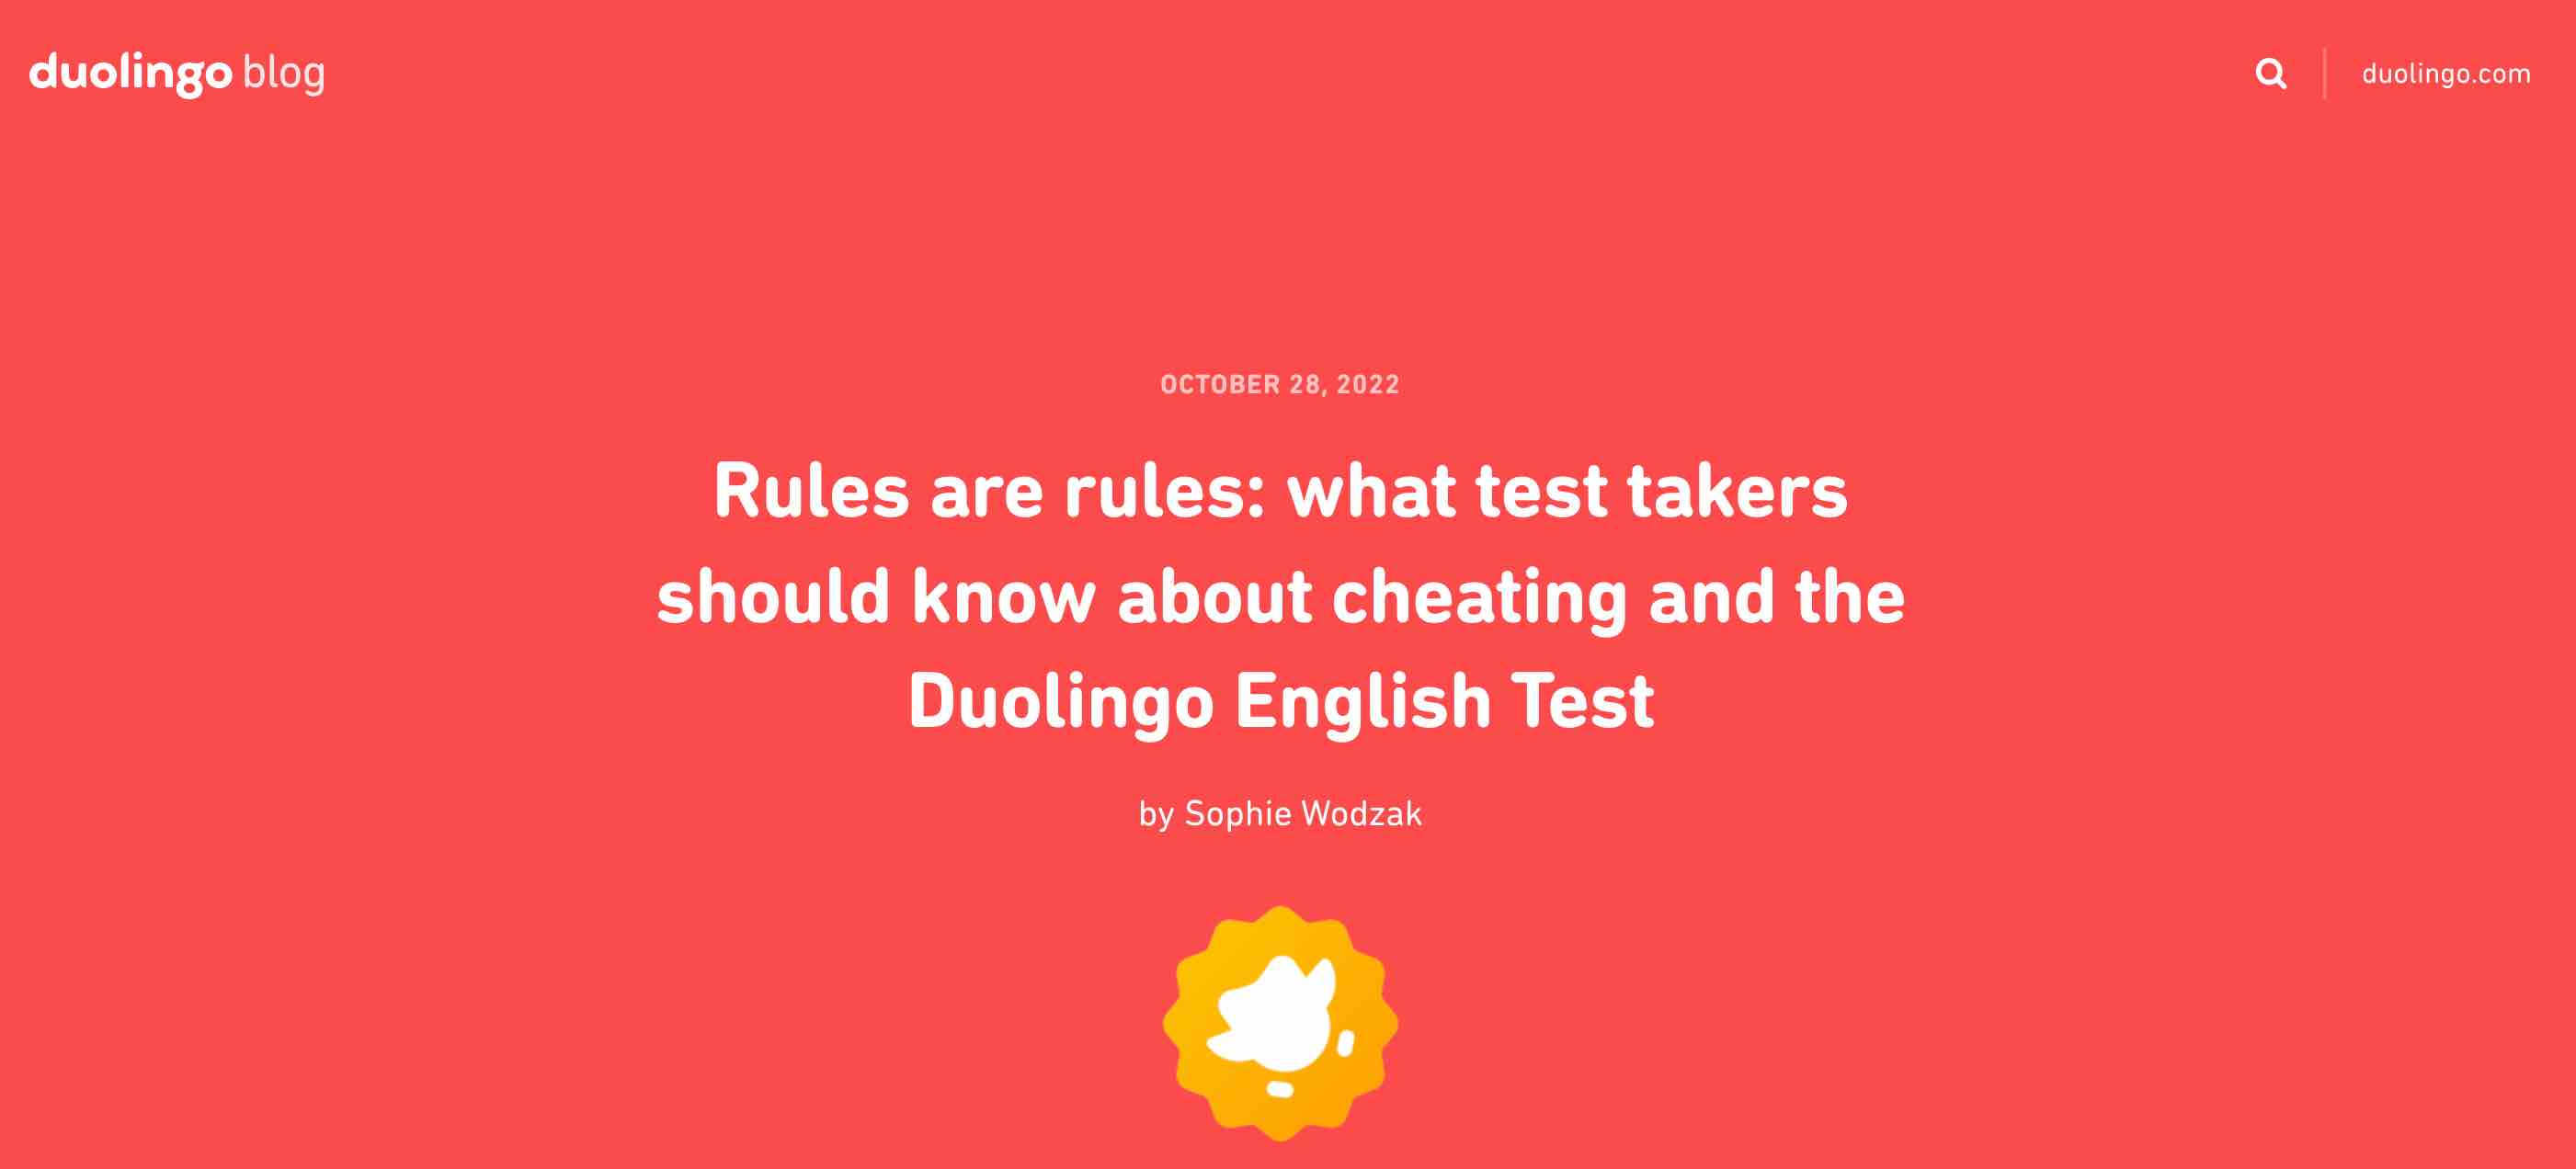 DET cheating consequences, cheat on the DET, duolingo English Test, DET Practice Platform, DET Practice materials